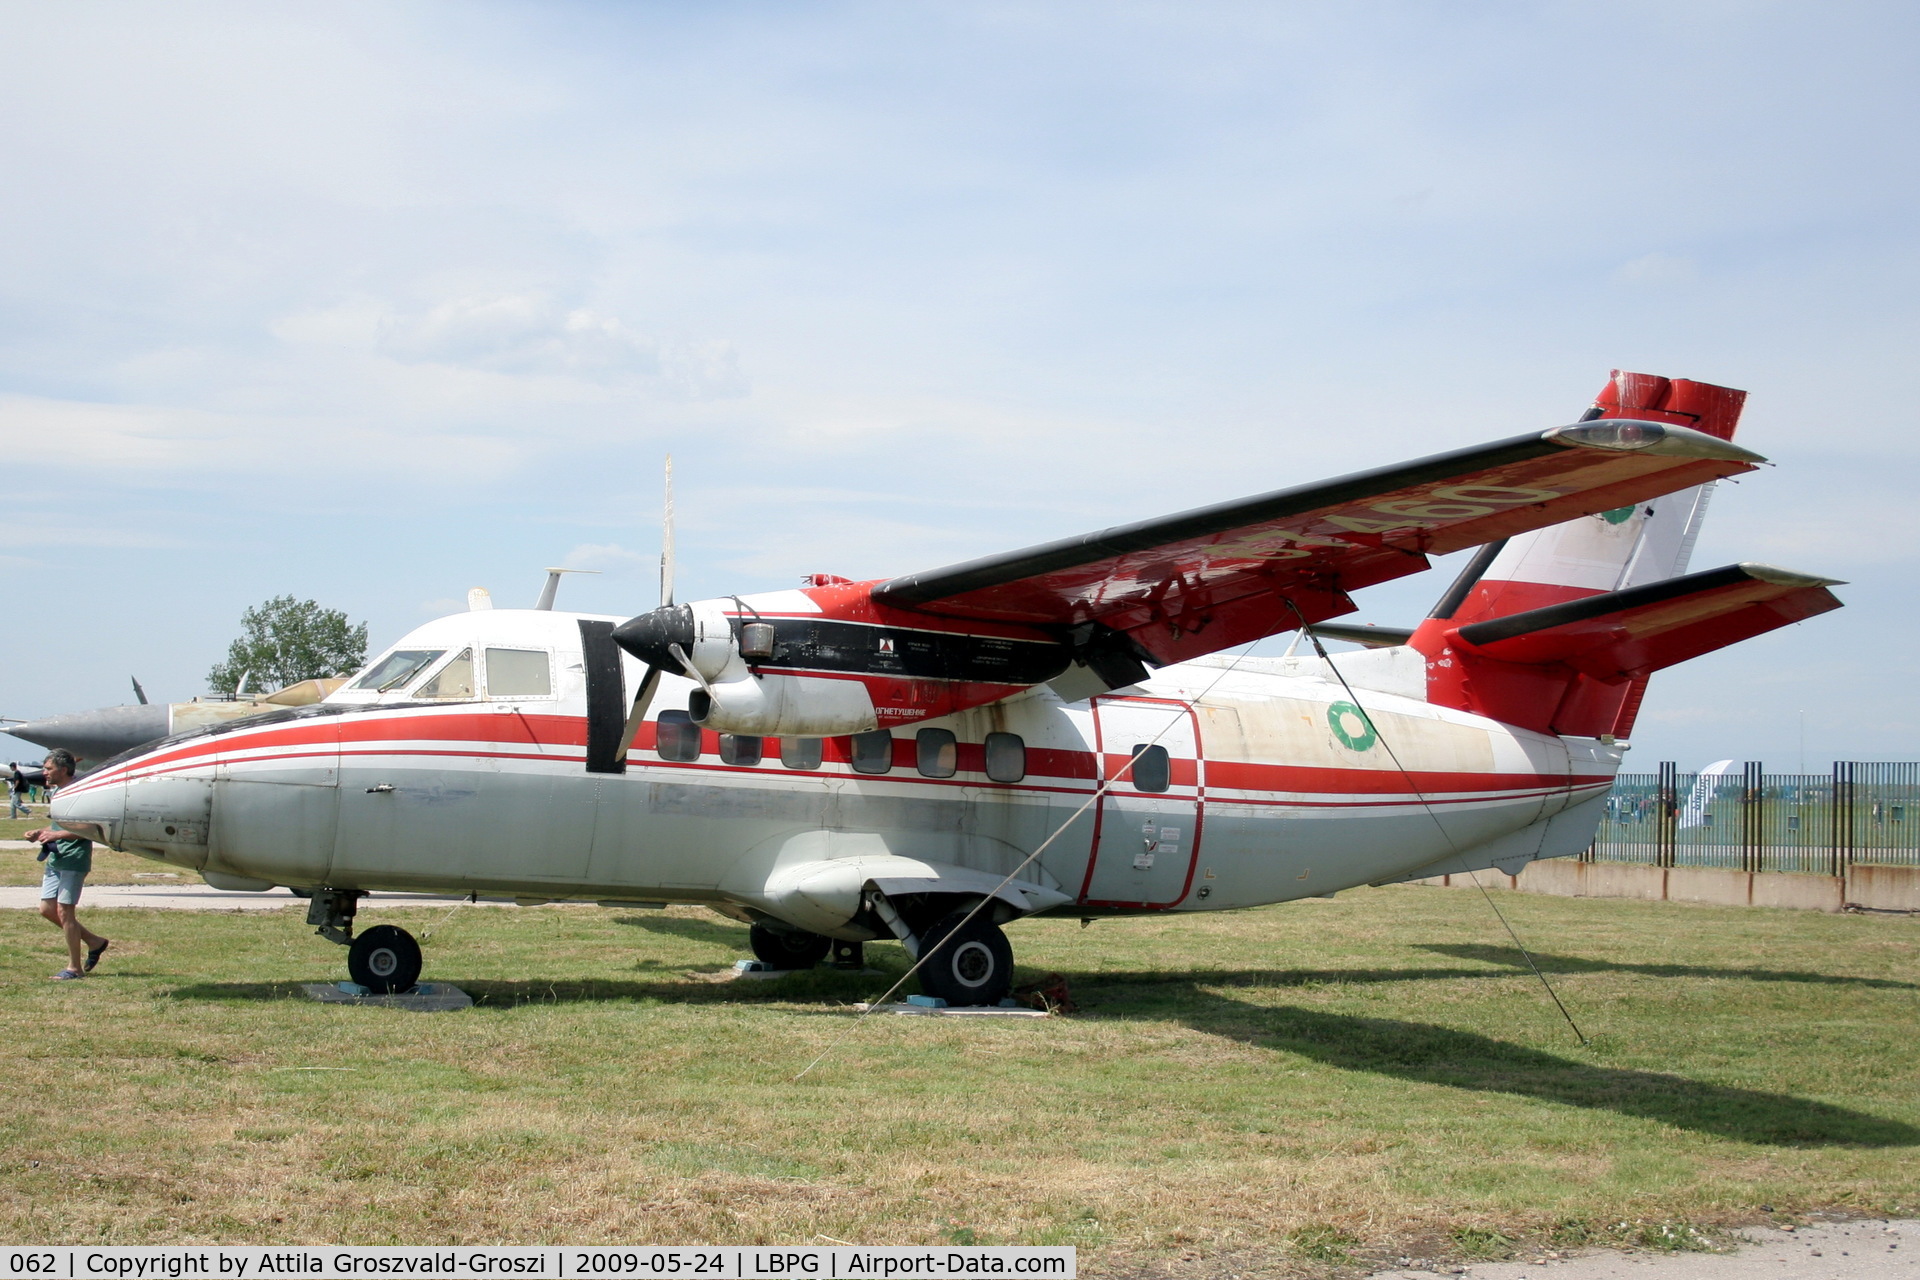 062, 1984 Let L-410UVP Turbolet C/N 841225, Bulgarian Museum of Aviation, Plovdiv-Krumovo (LBPG).